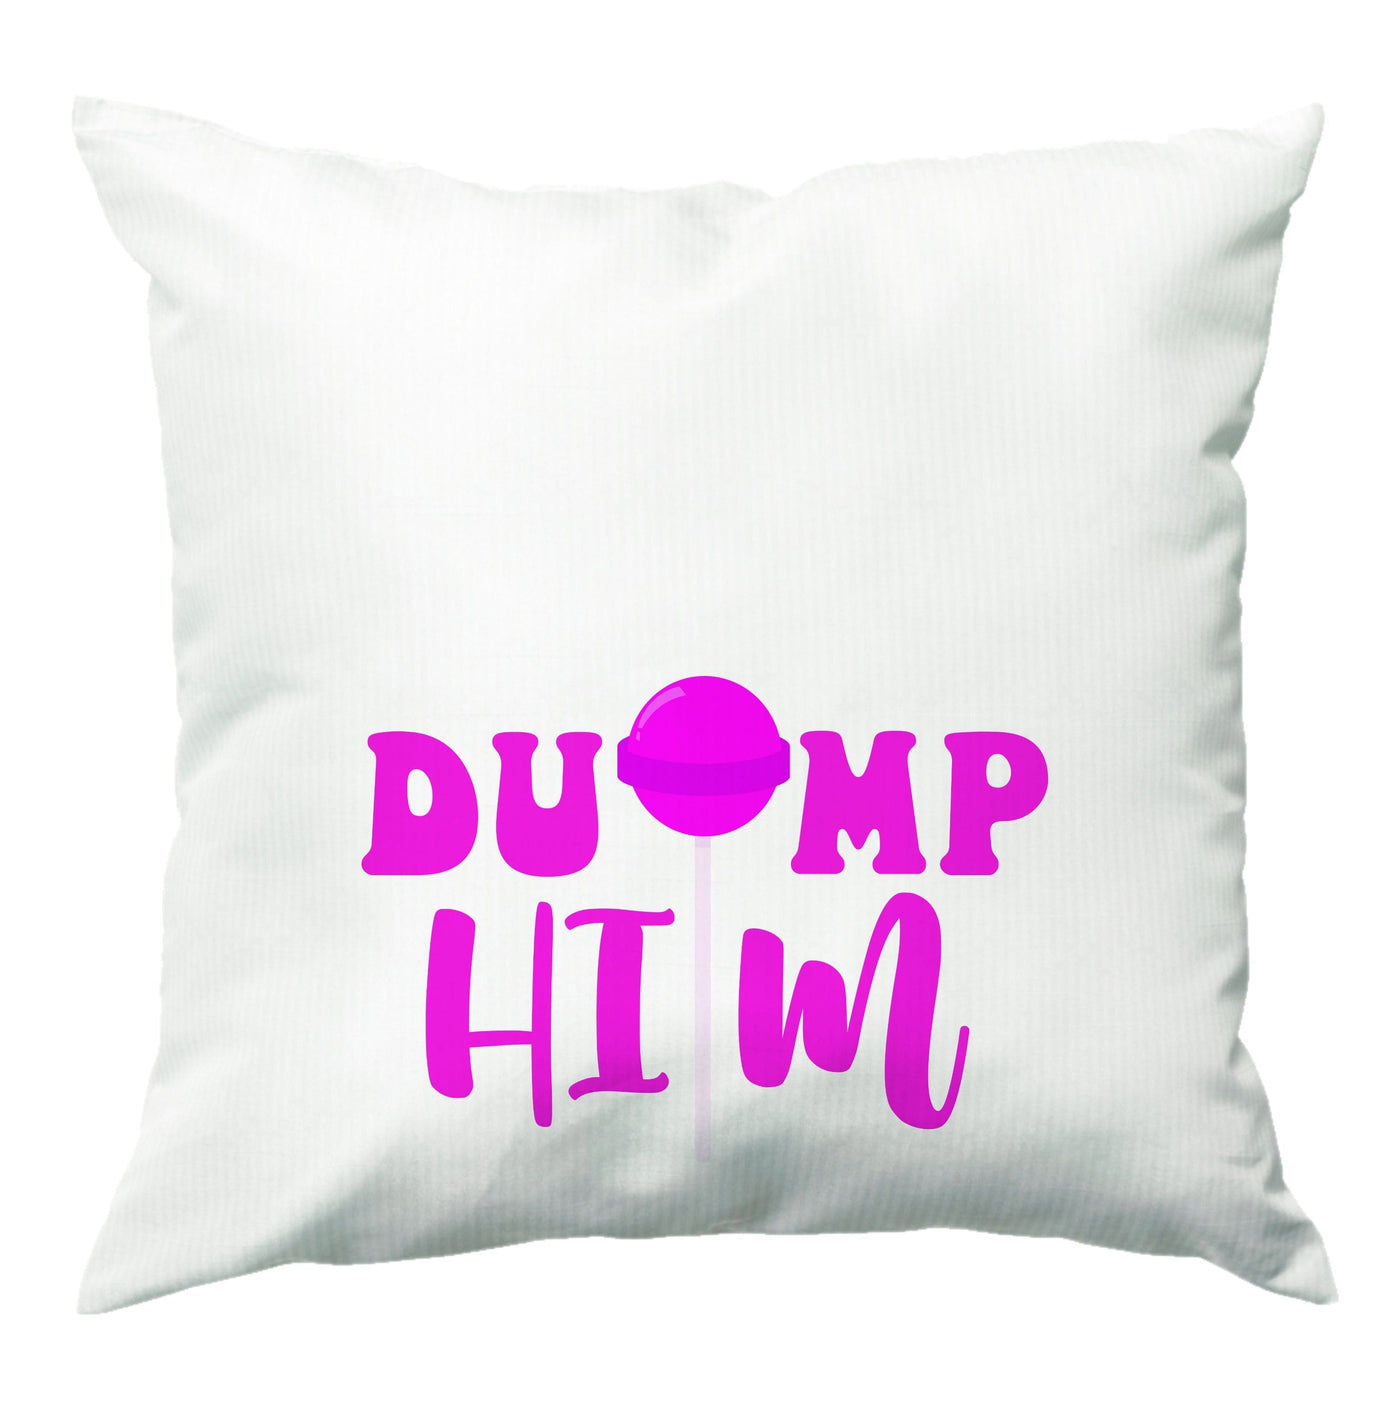 Dump Him - Summer Cushion